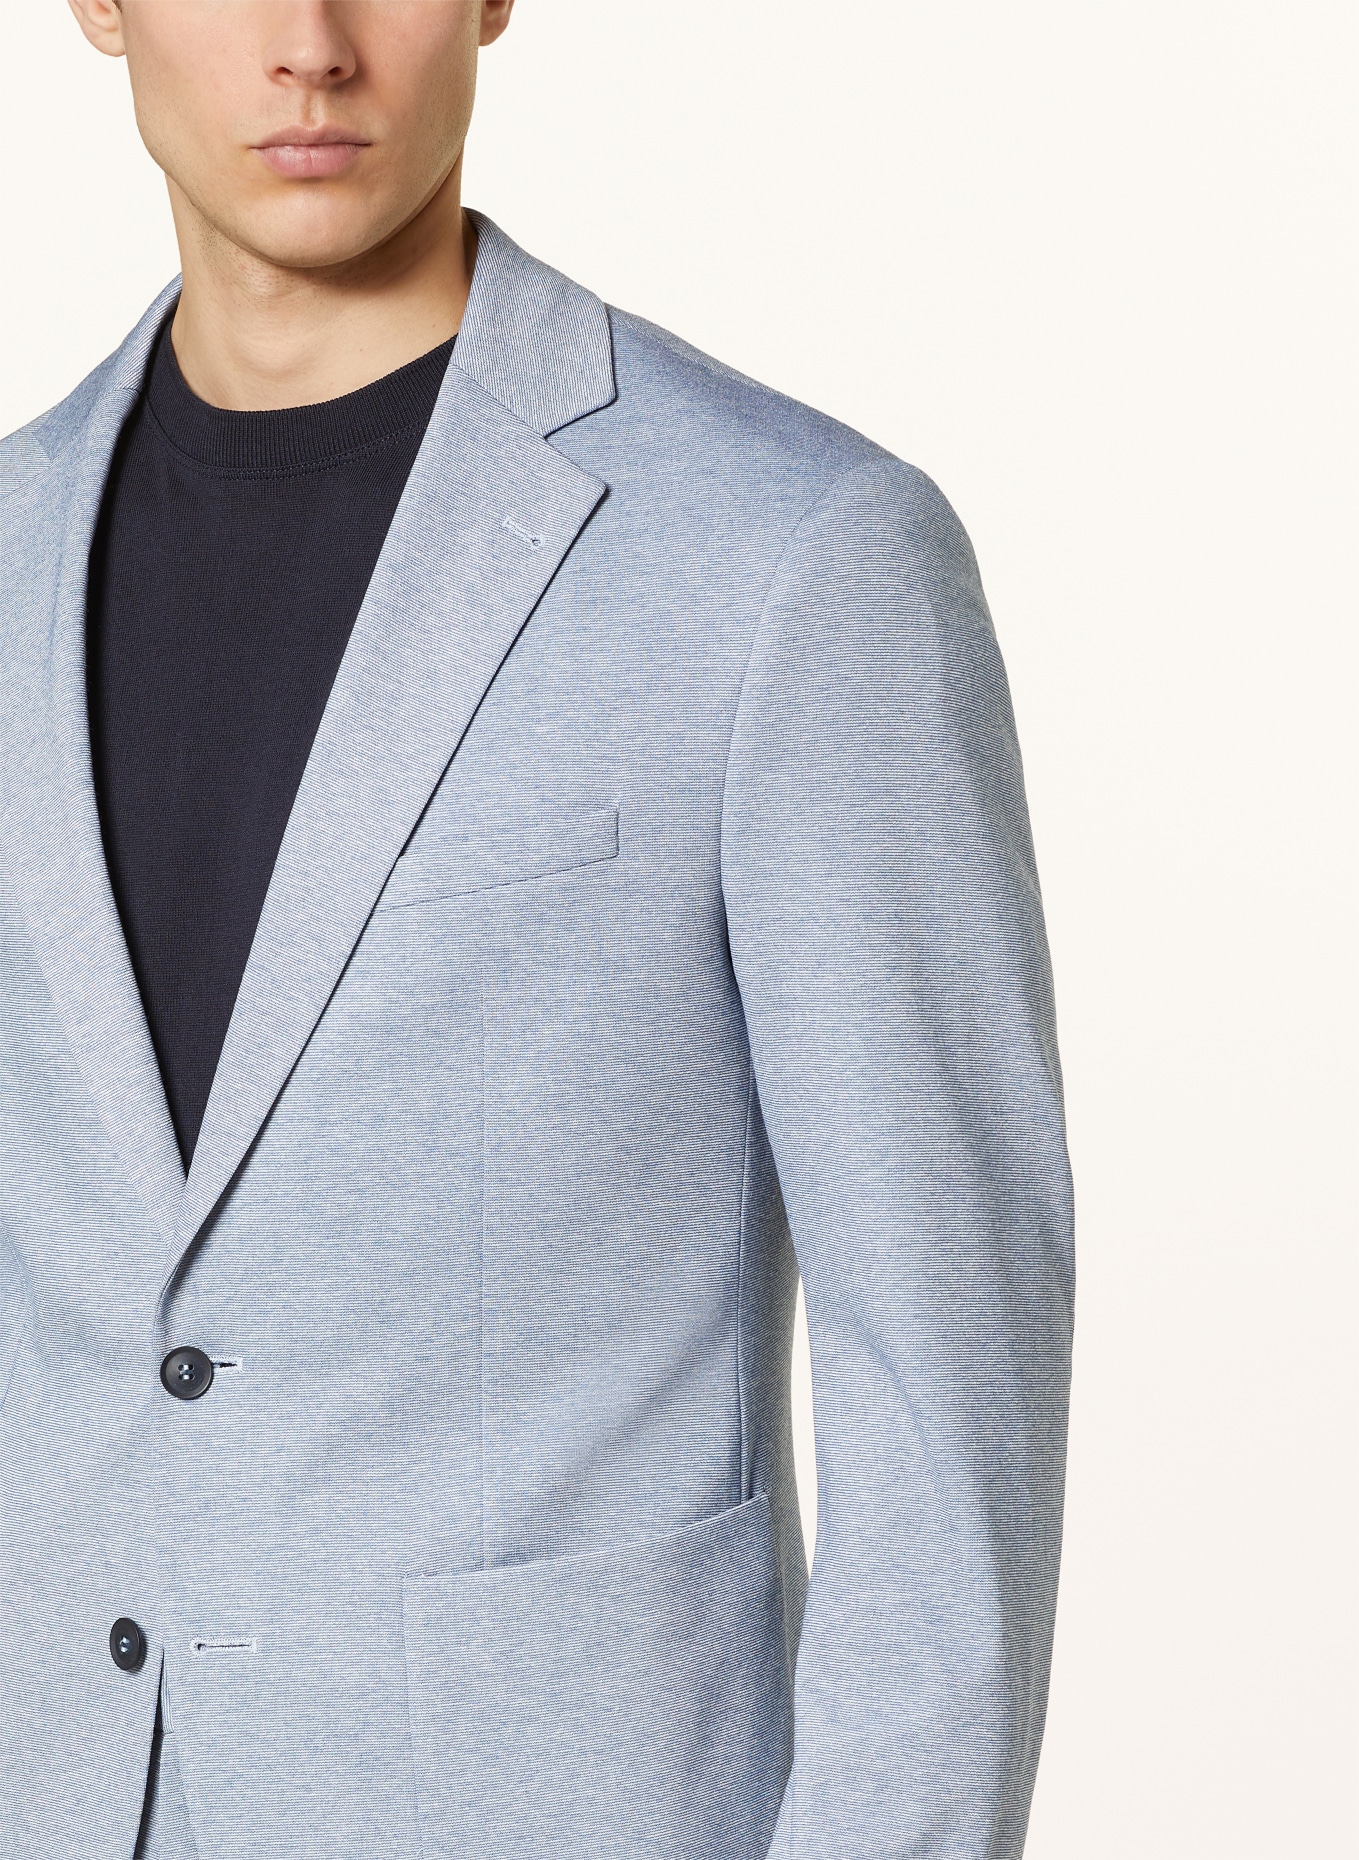 CINQUE Suit jacket CIDATI extra slim fit in jersey, Color: 68 dunkelblau (Image 6)